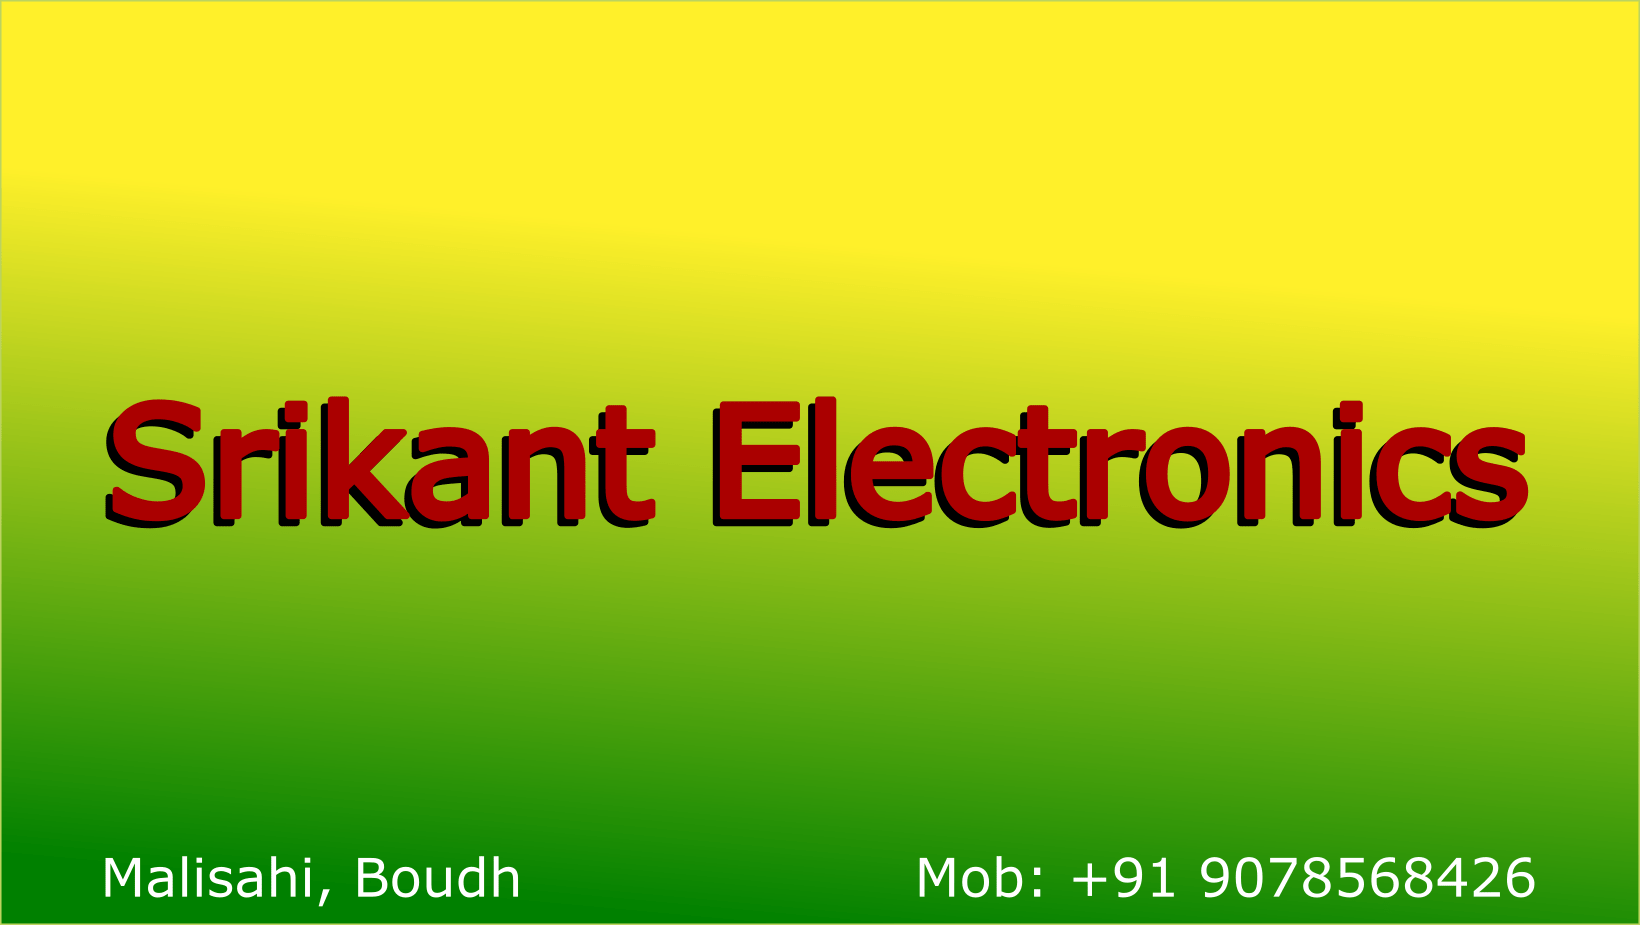 Srikant Electronics